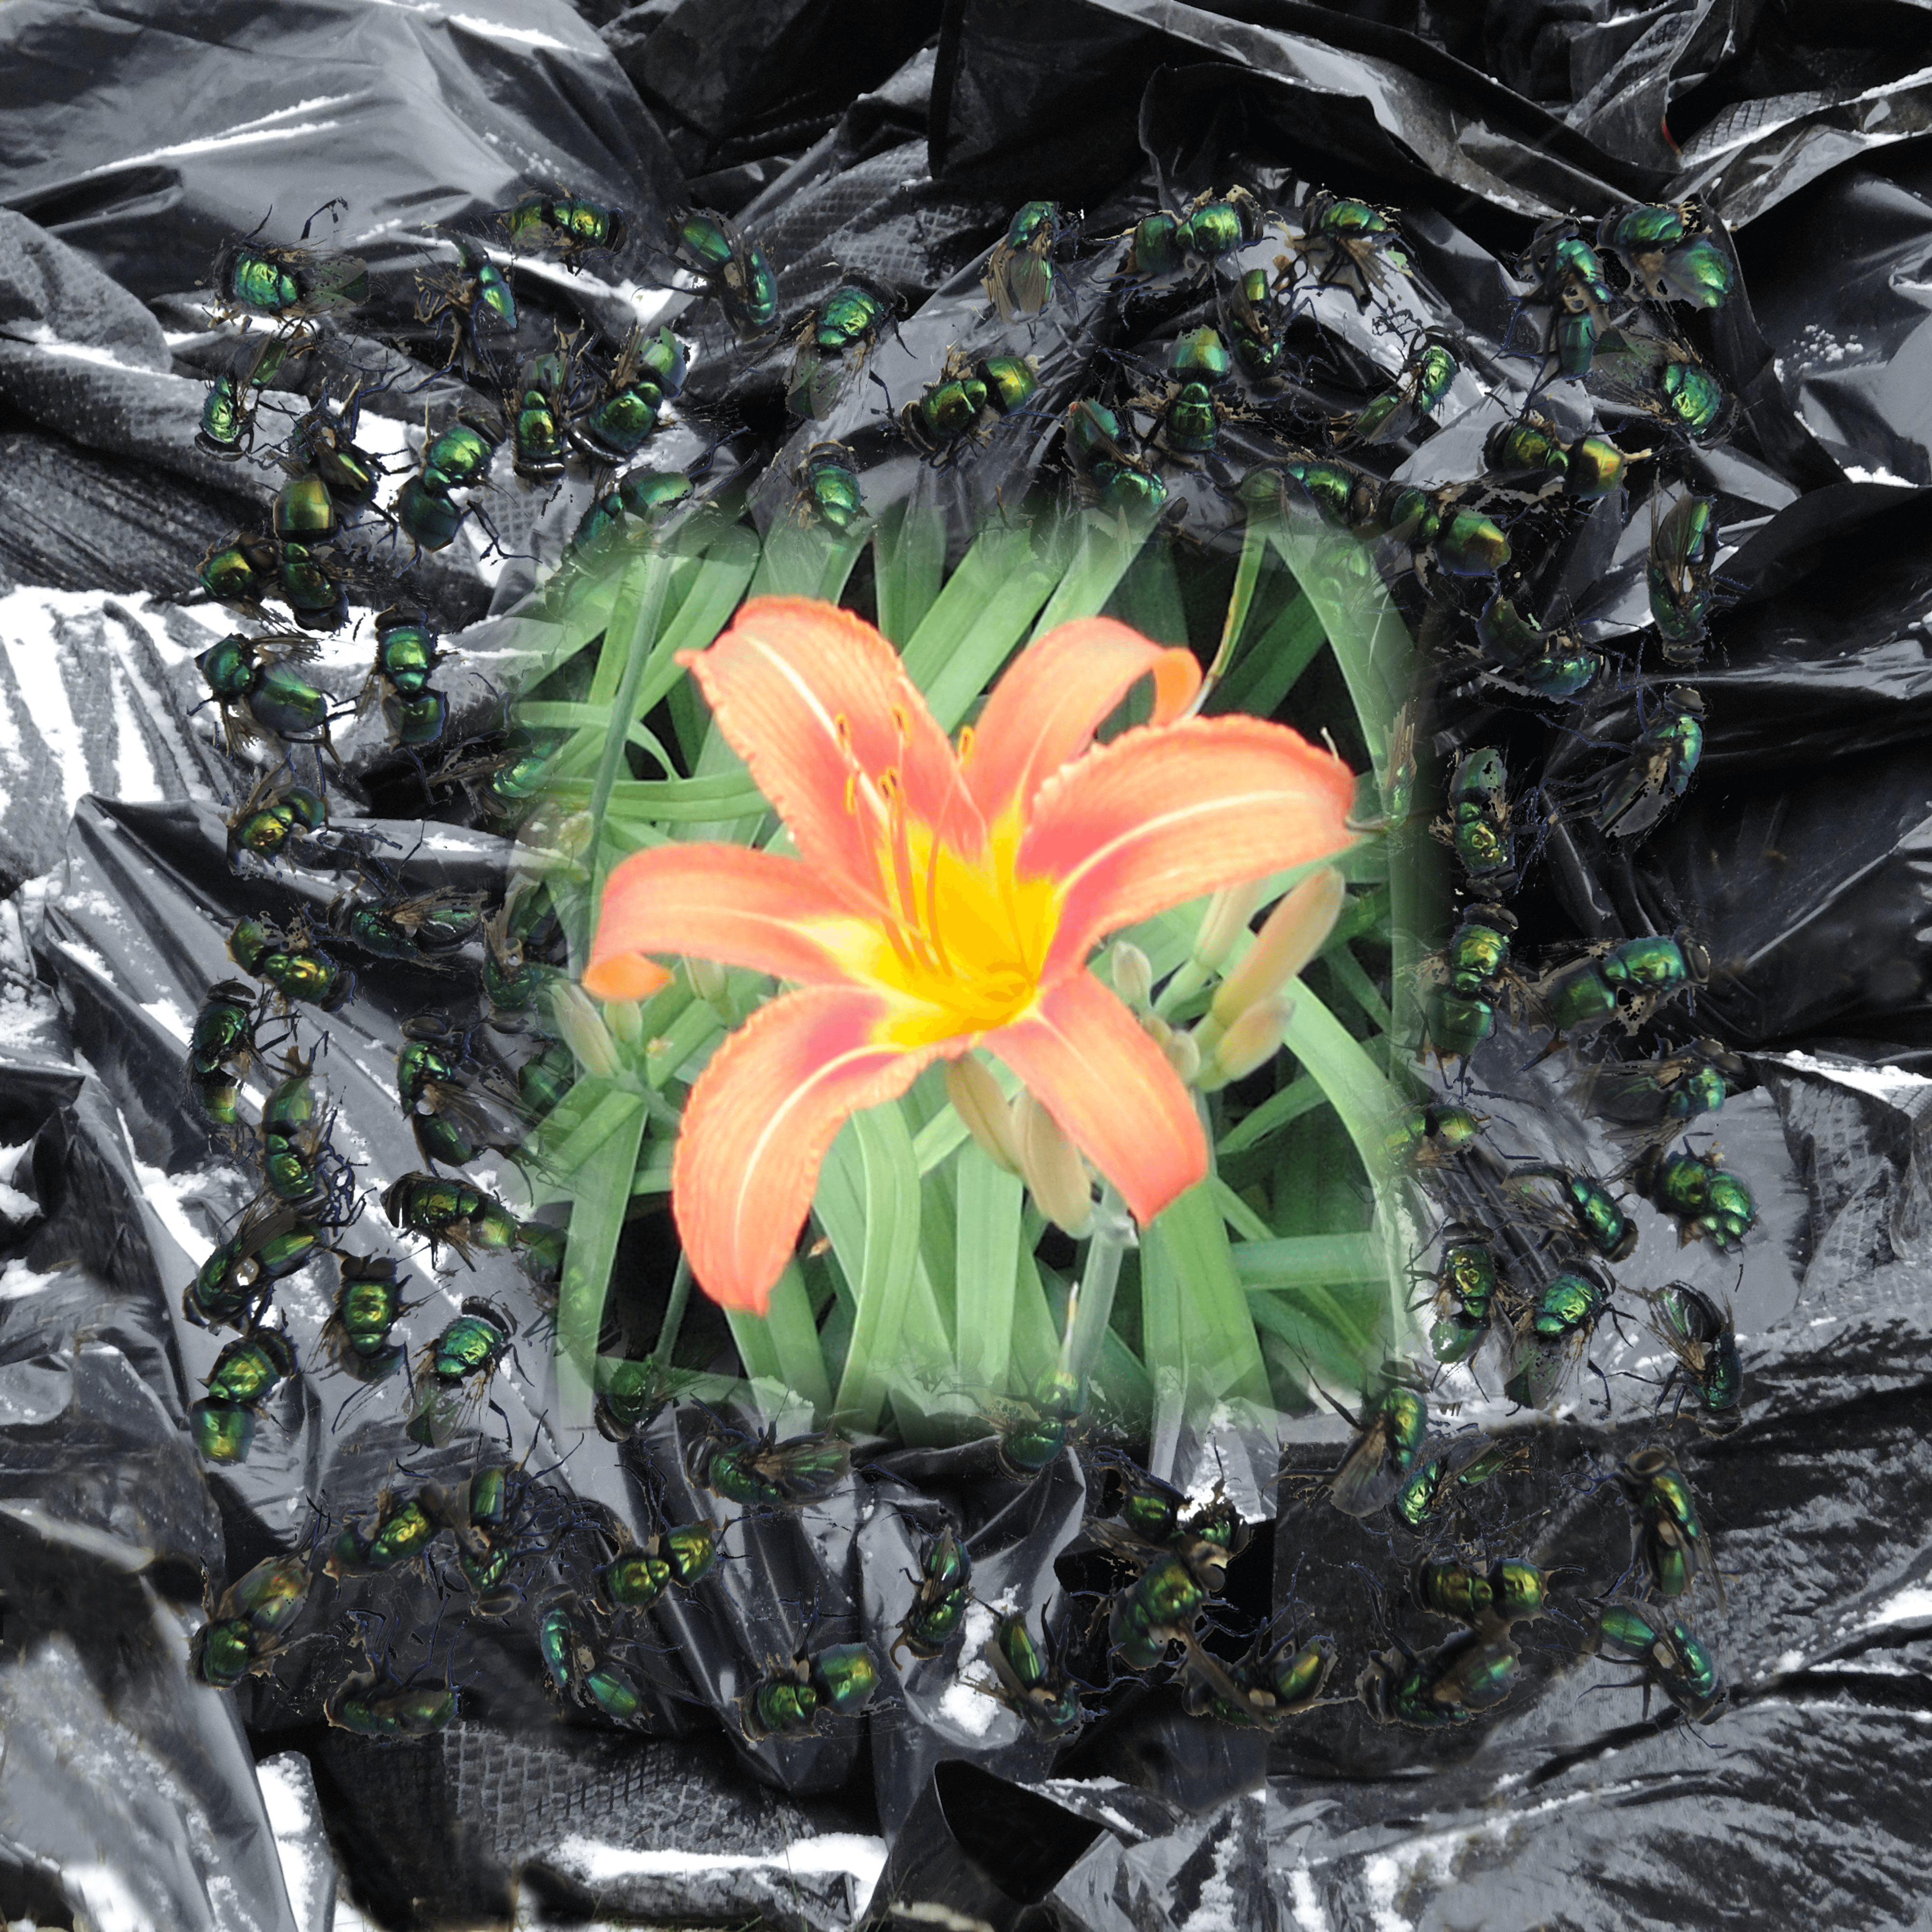 Trash, Flies & Flower